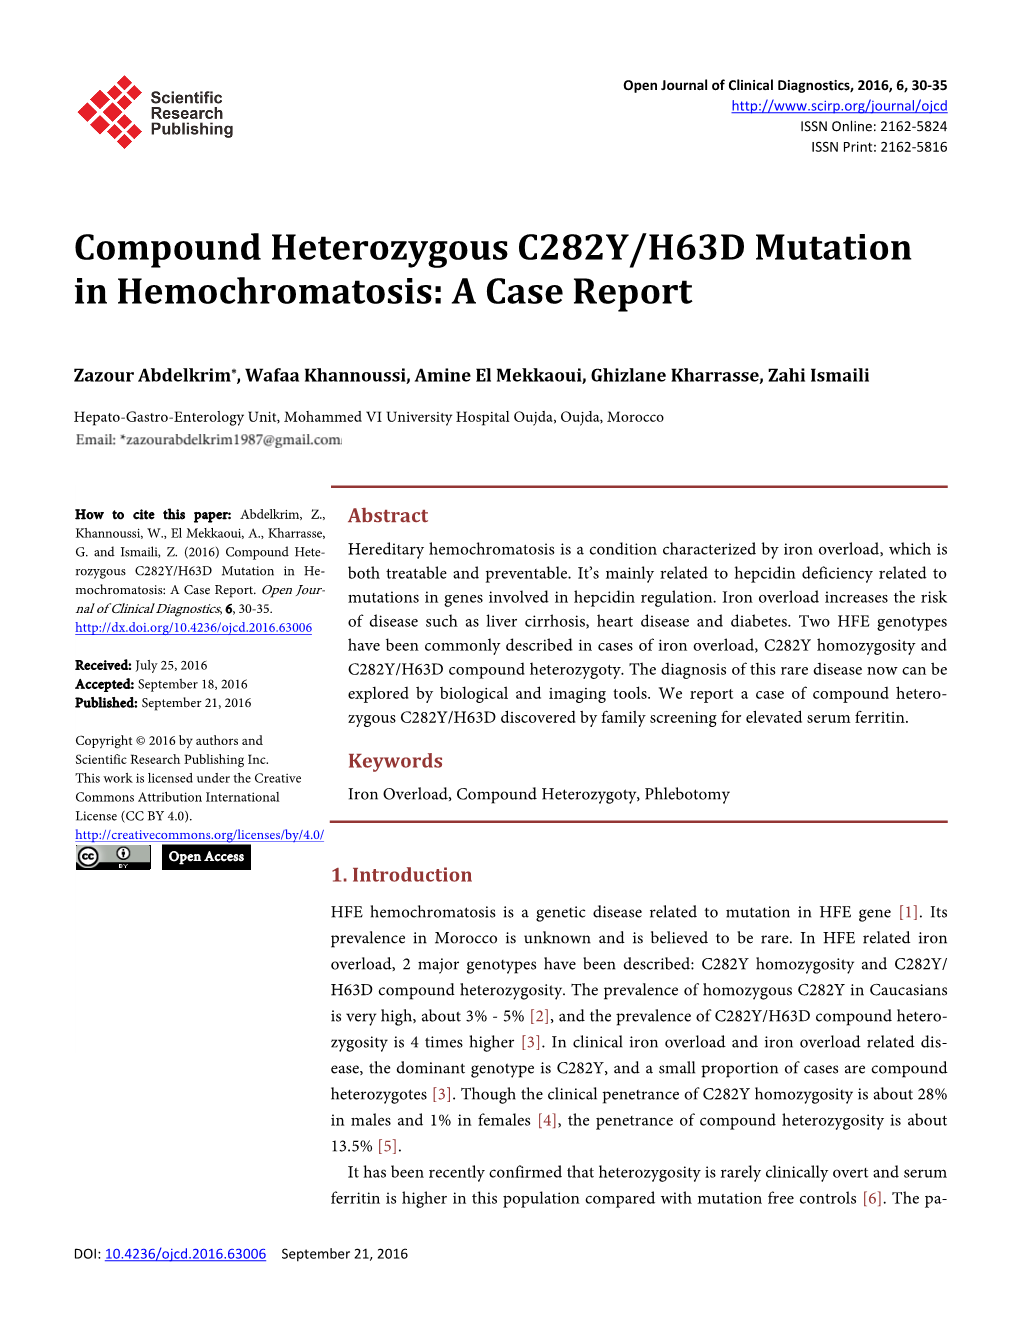 Compound Heterozygous C282Y/H63D Mutation in Hemochromatosis: a Case Report